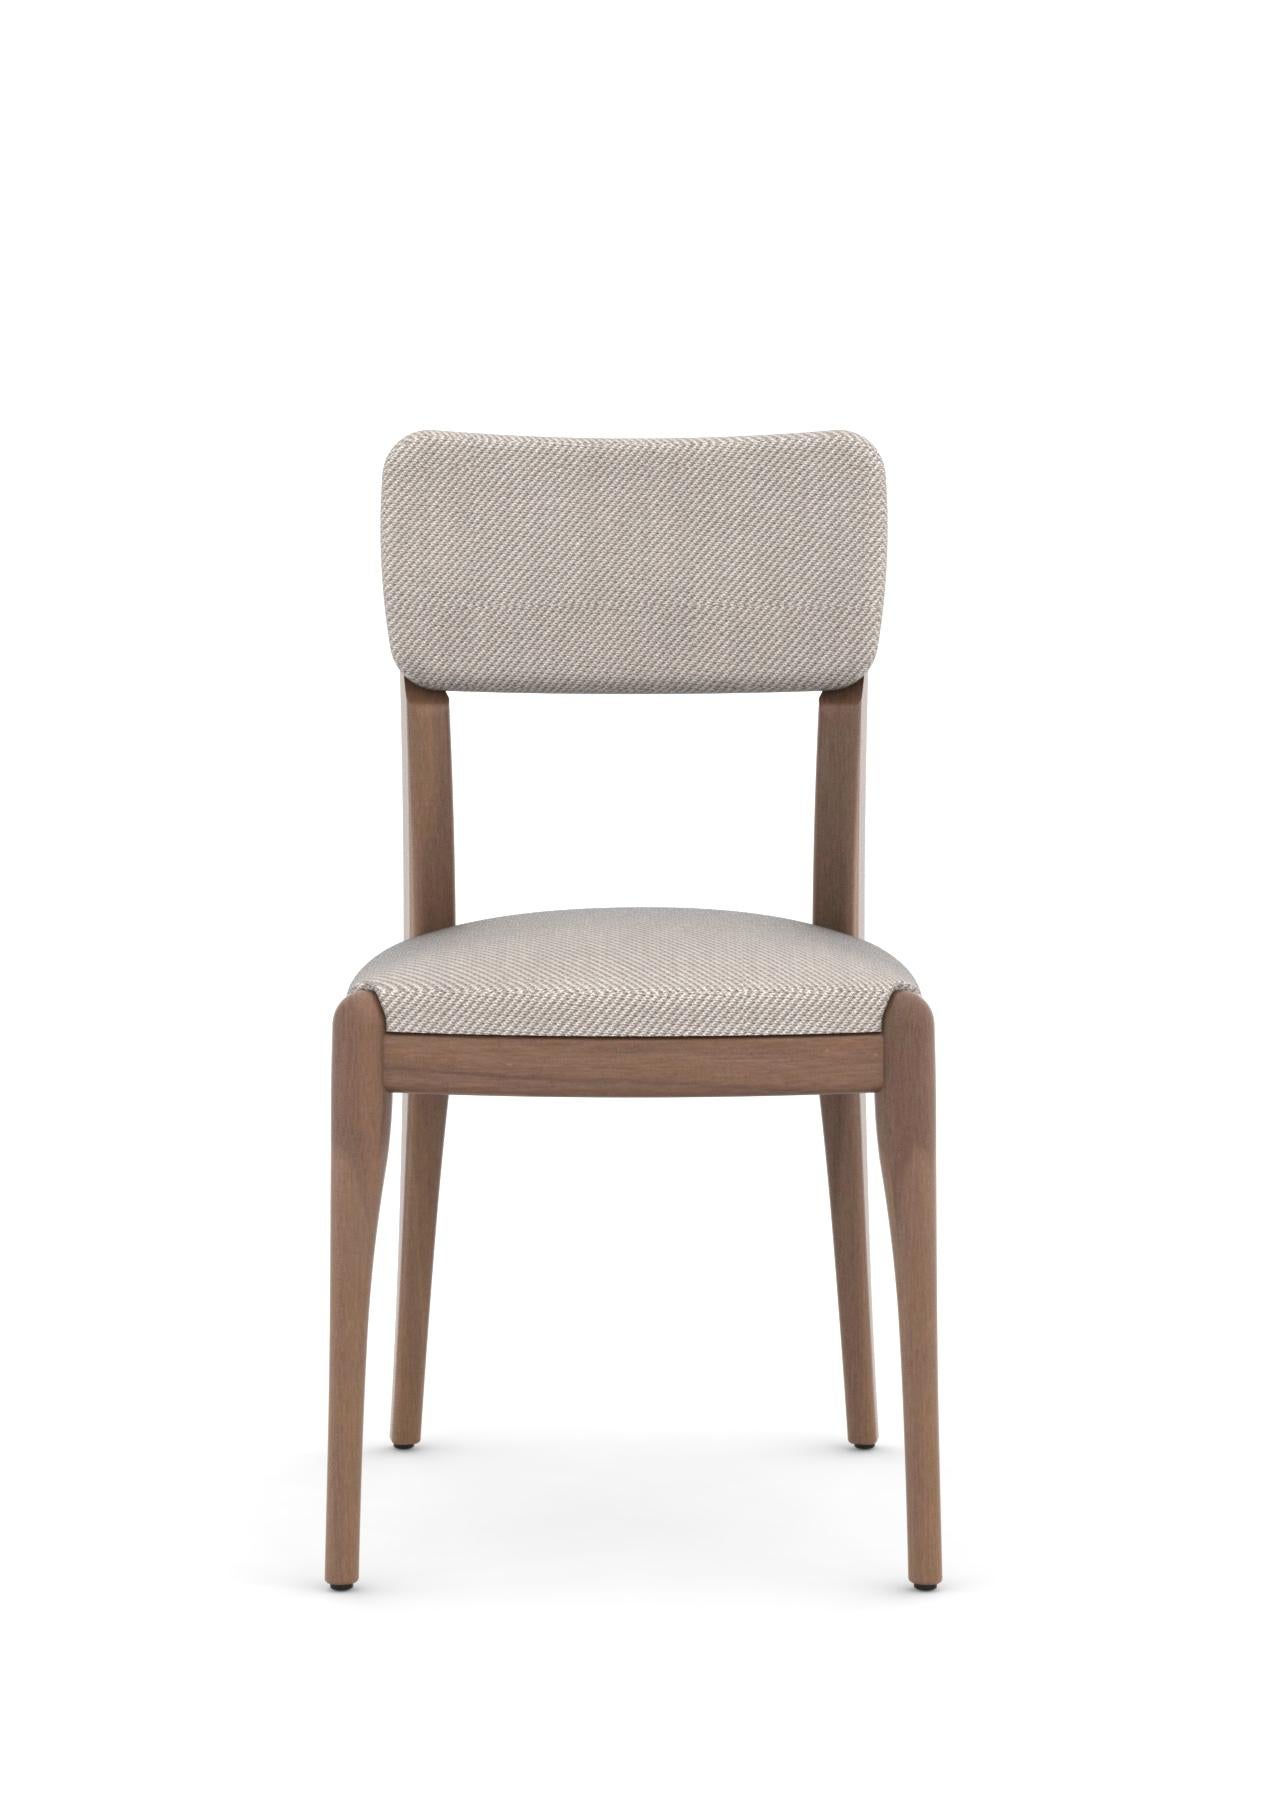 Scandinavian Modern Revised Finchdean – solid walnut dining chair